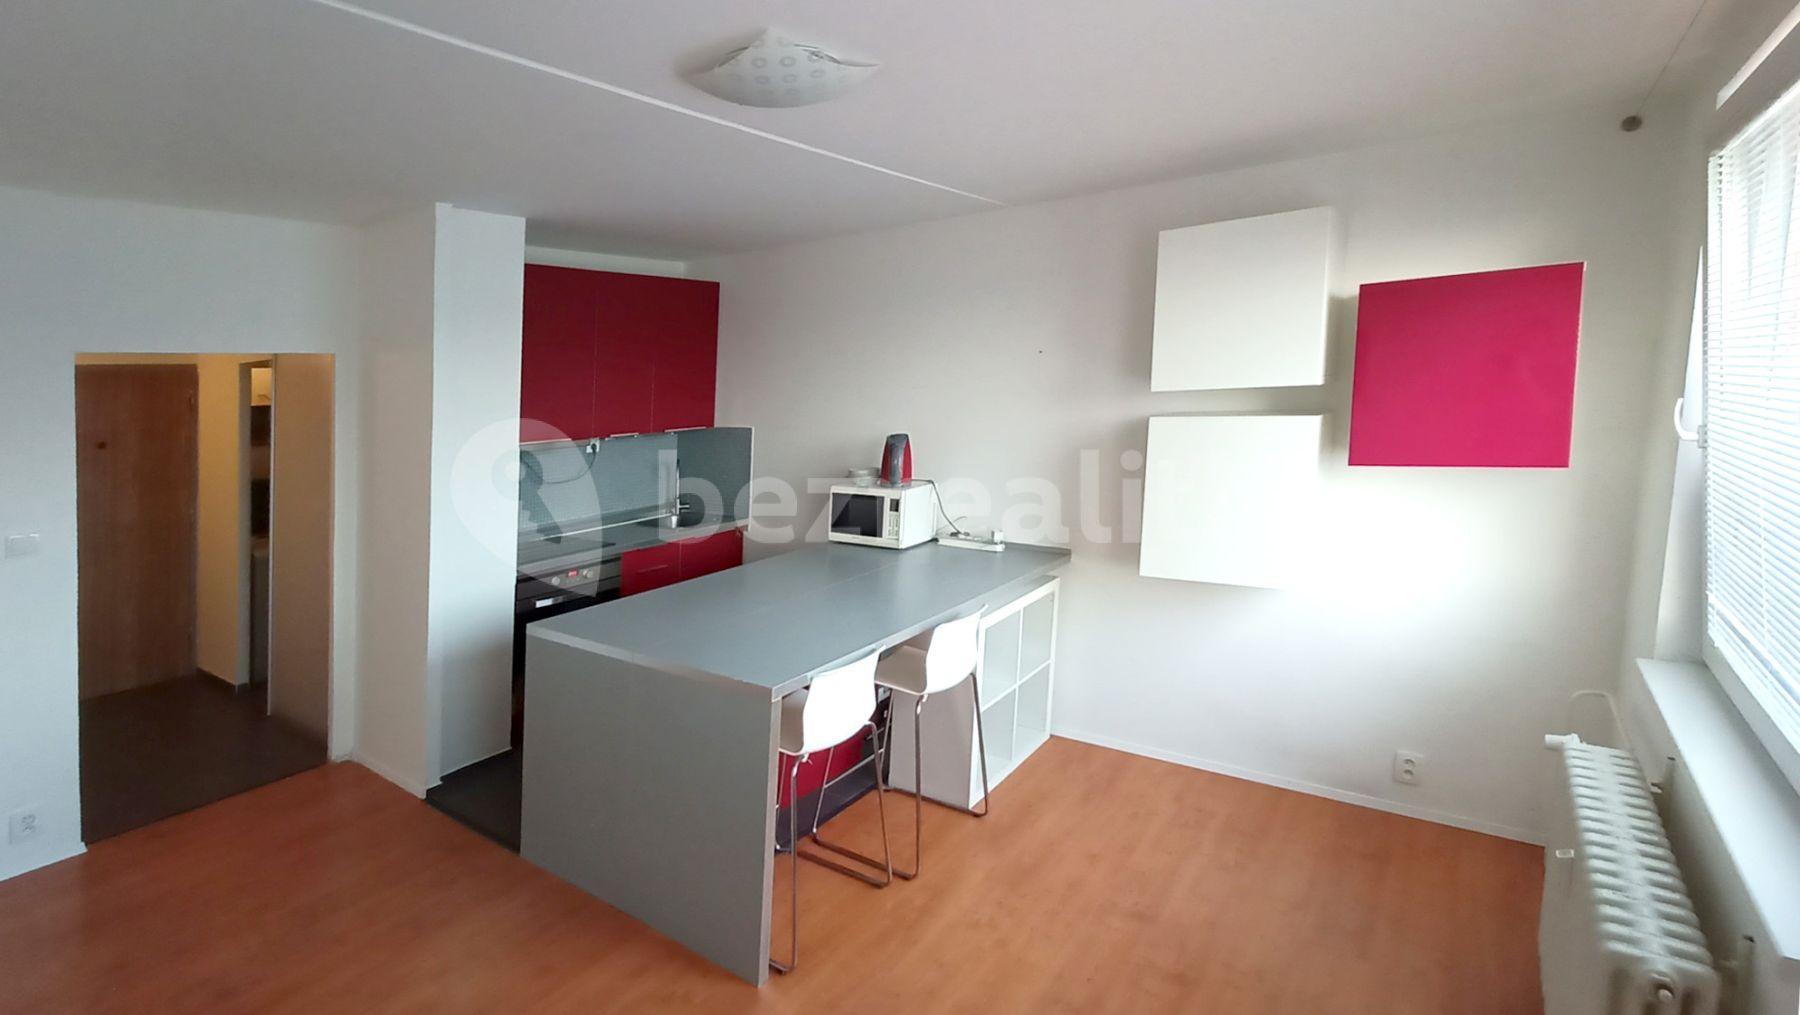 1 bedroom with open-plan kitchen flat to rent, 45 m², Jordana Jovkova, Prague, Prague